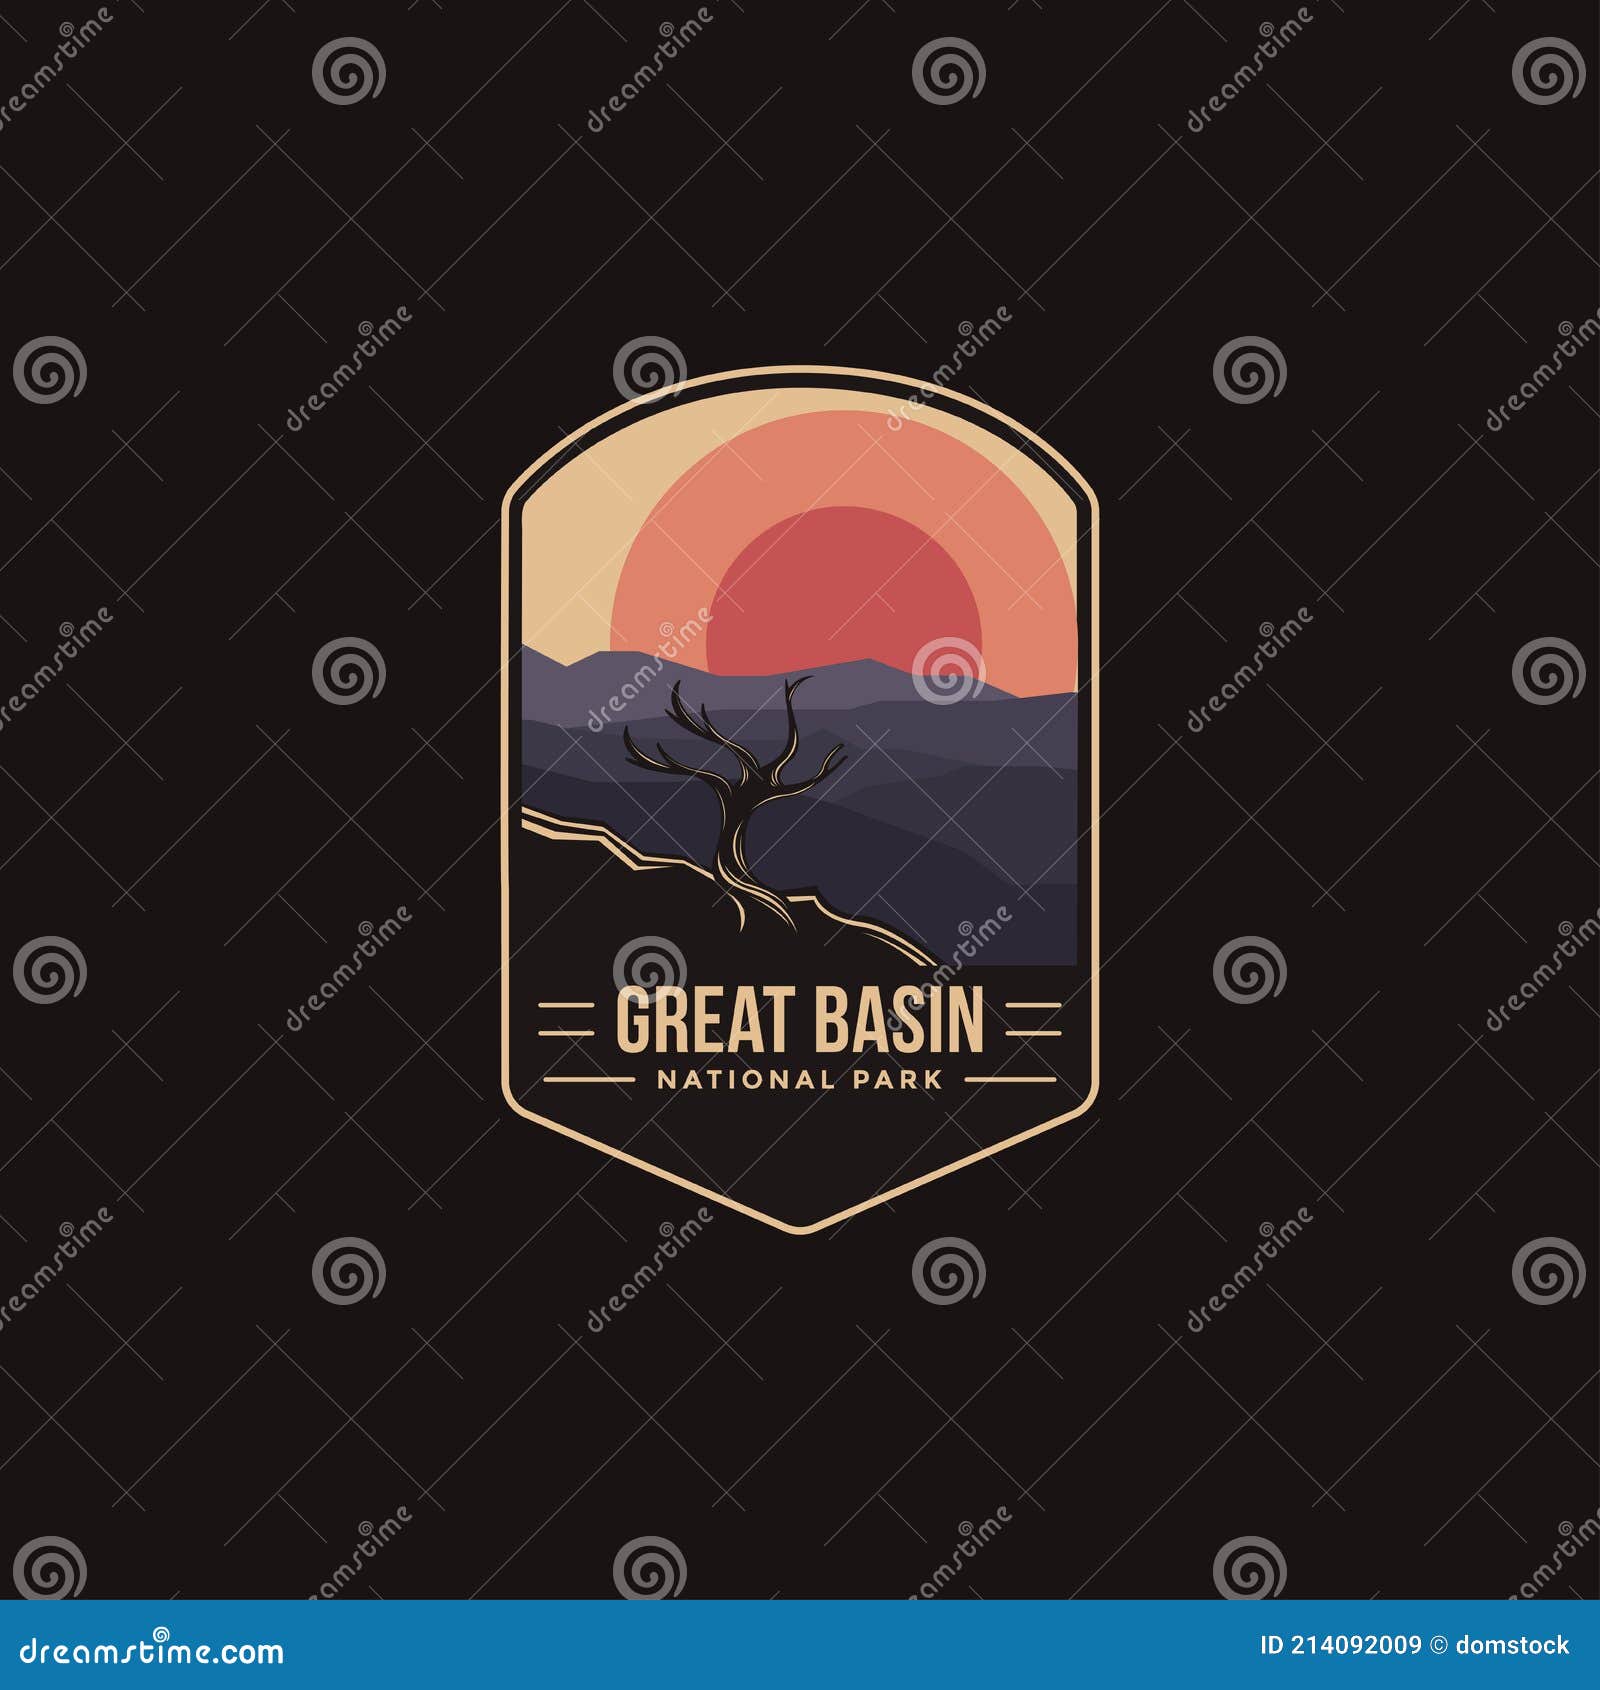 emblem patch logo  of great basin national park